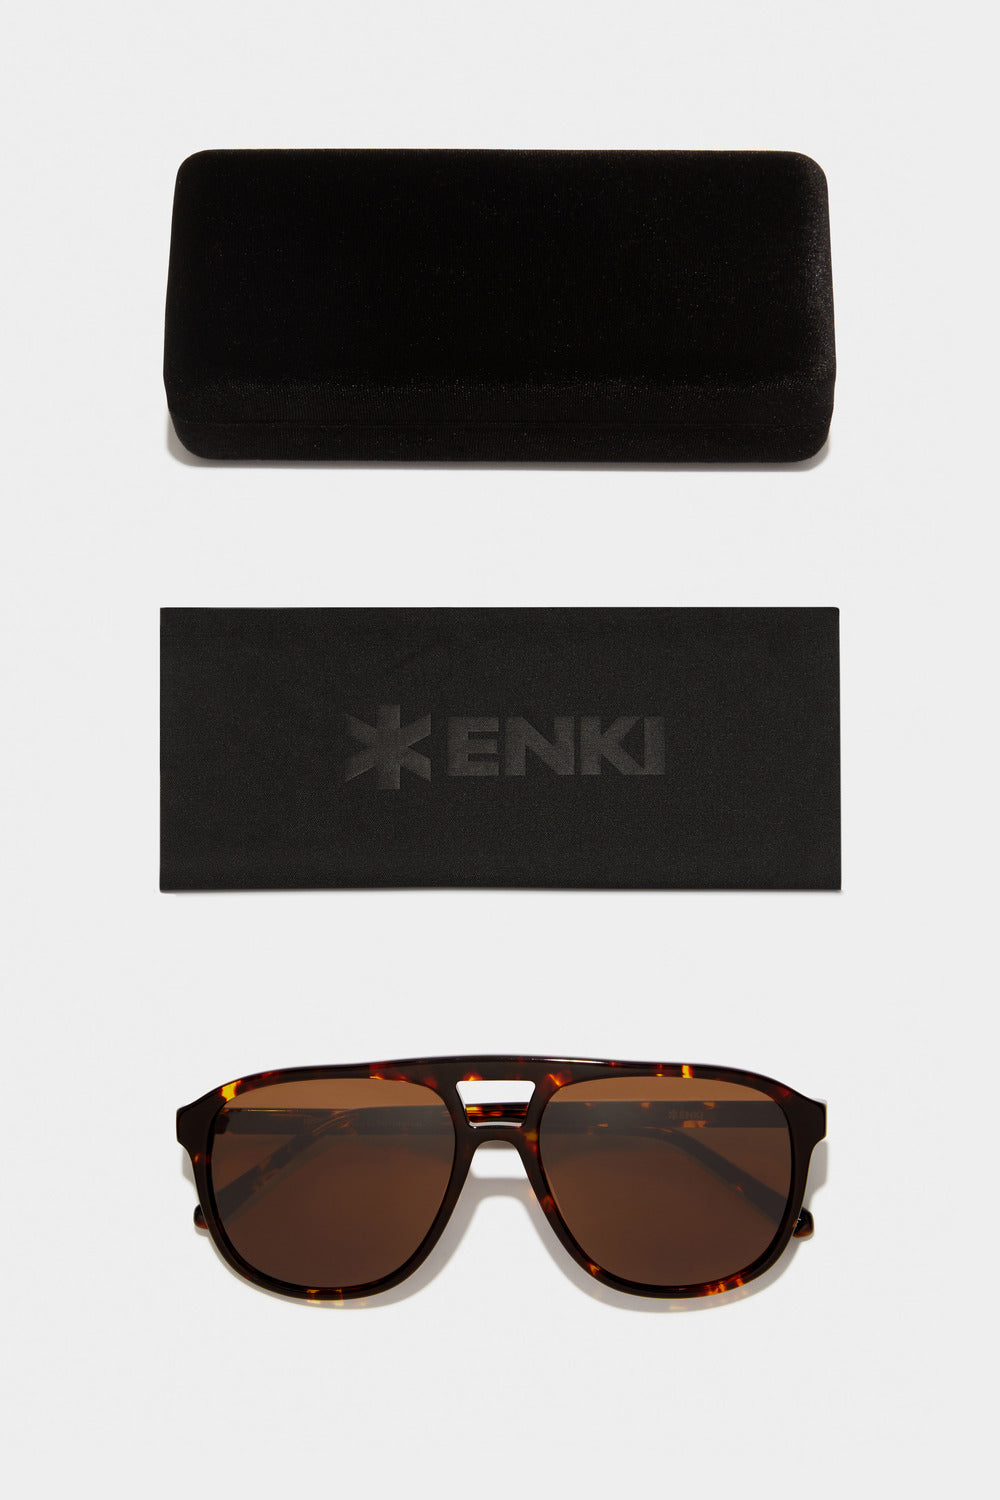 www.enkieyewear.com Herius Men’s and Women’s Sunglasses